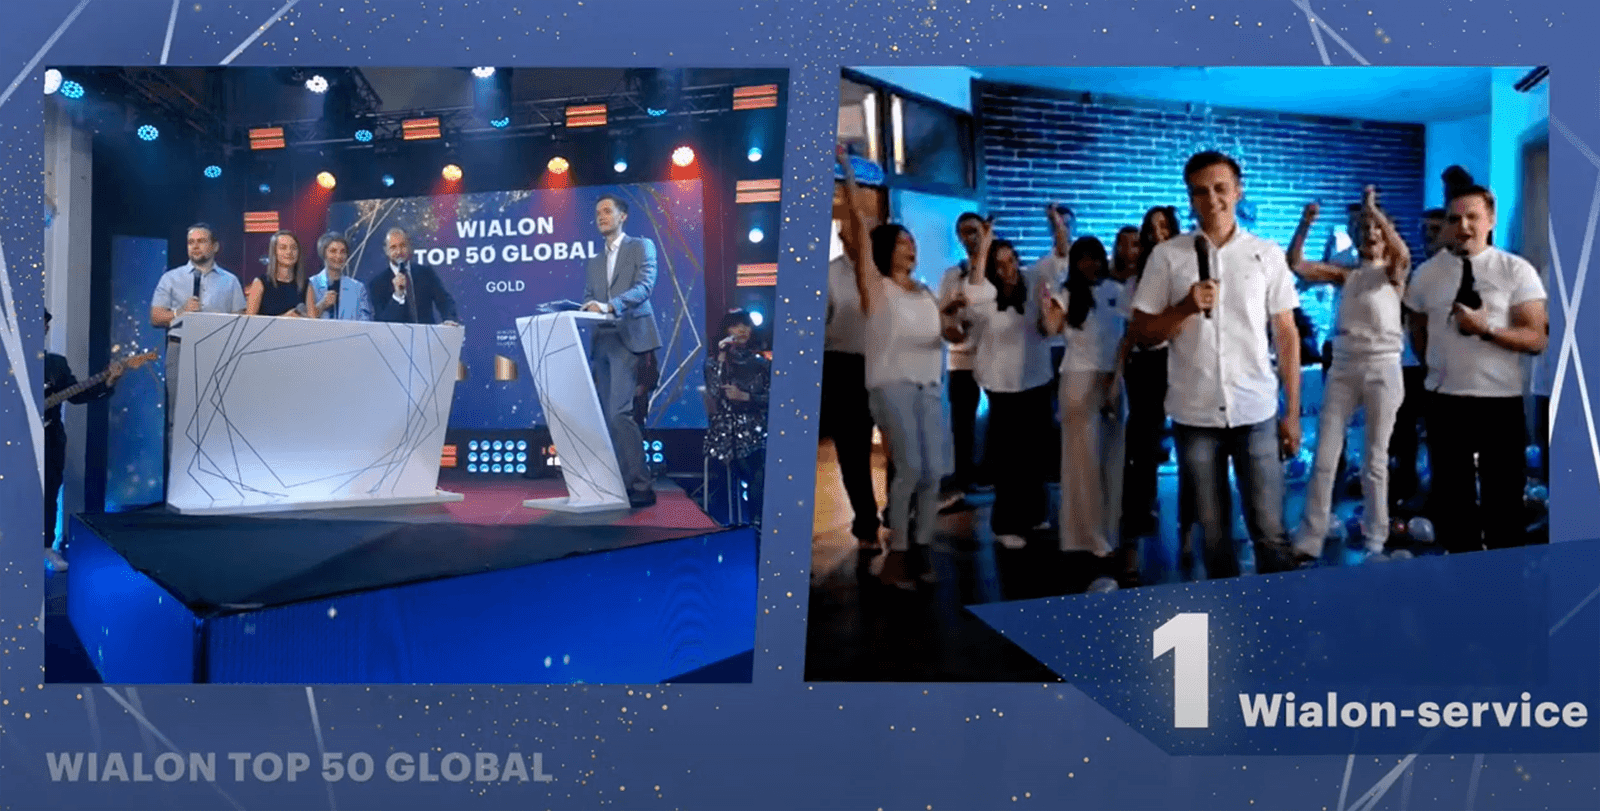 Wialon Top 50 Global ceremony